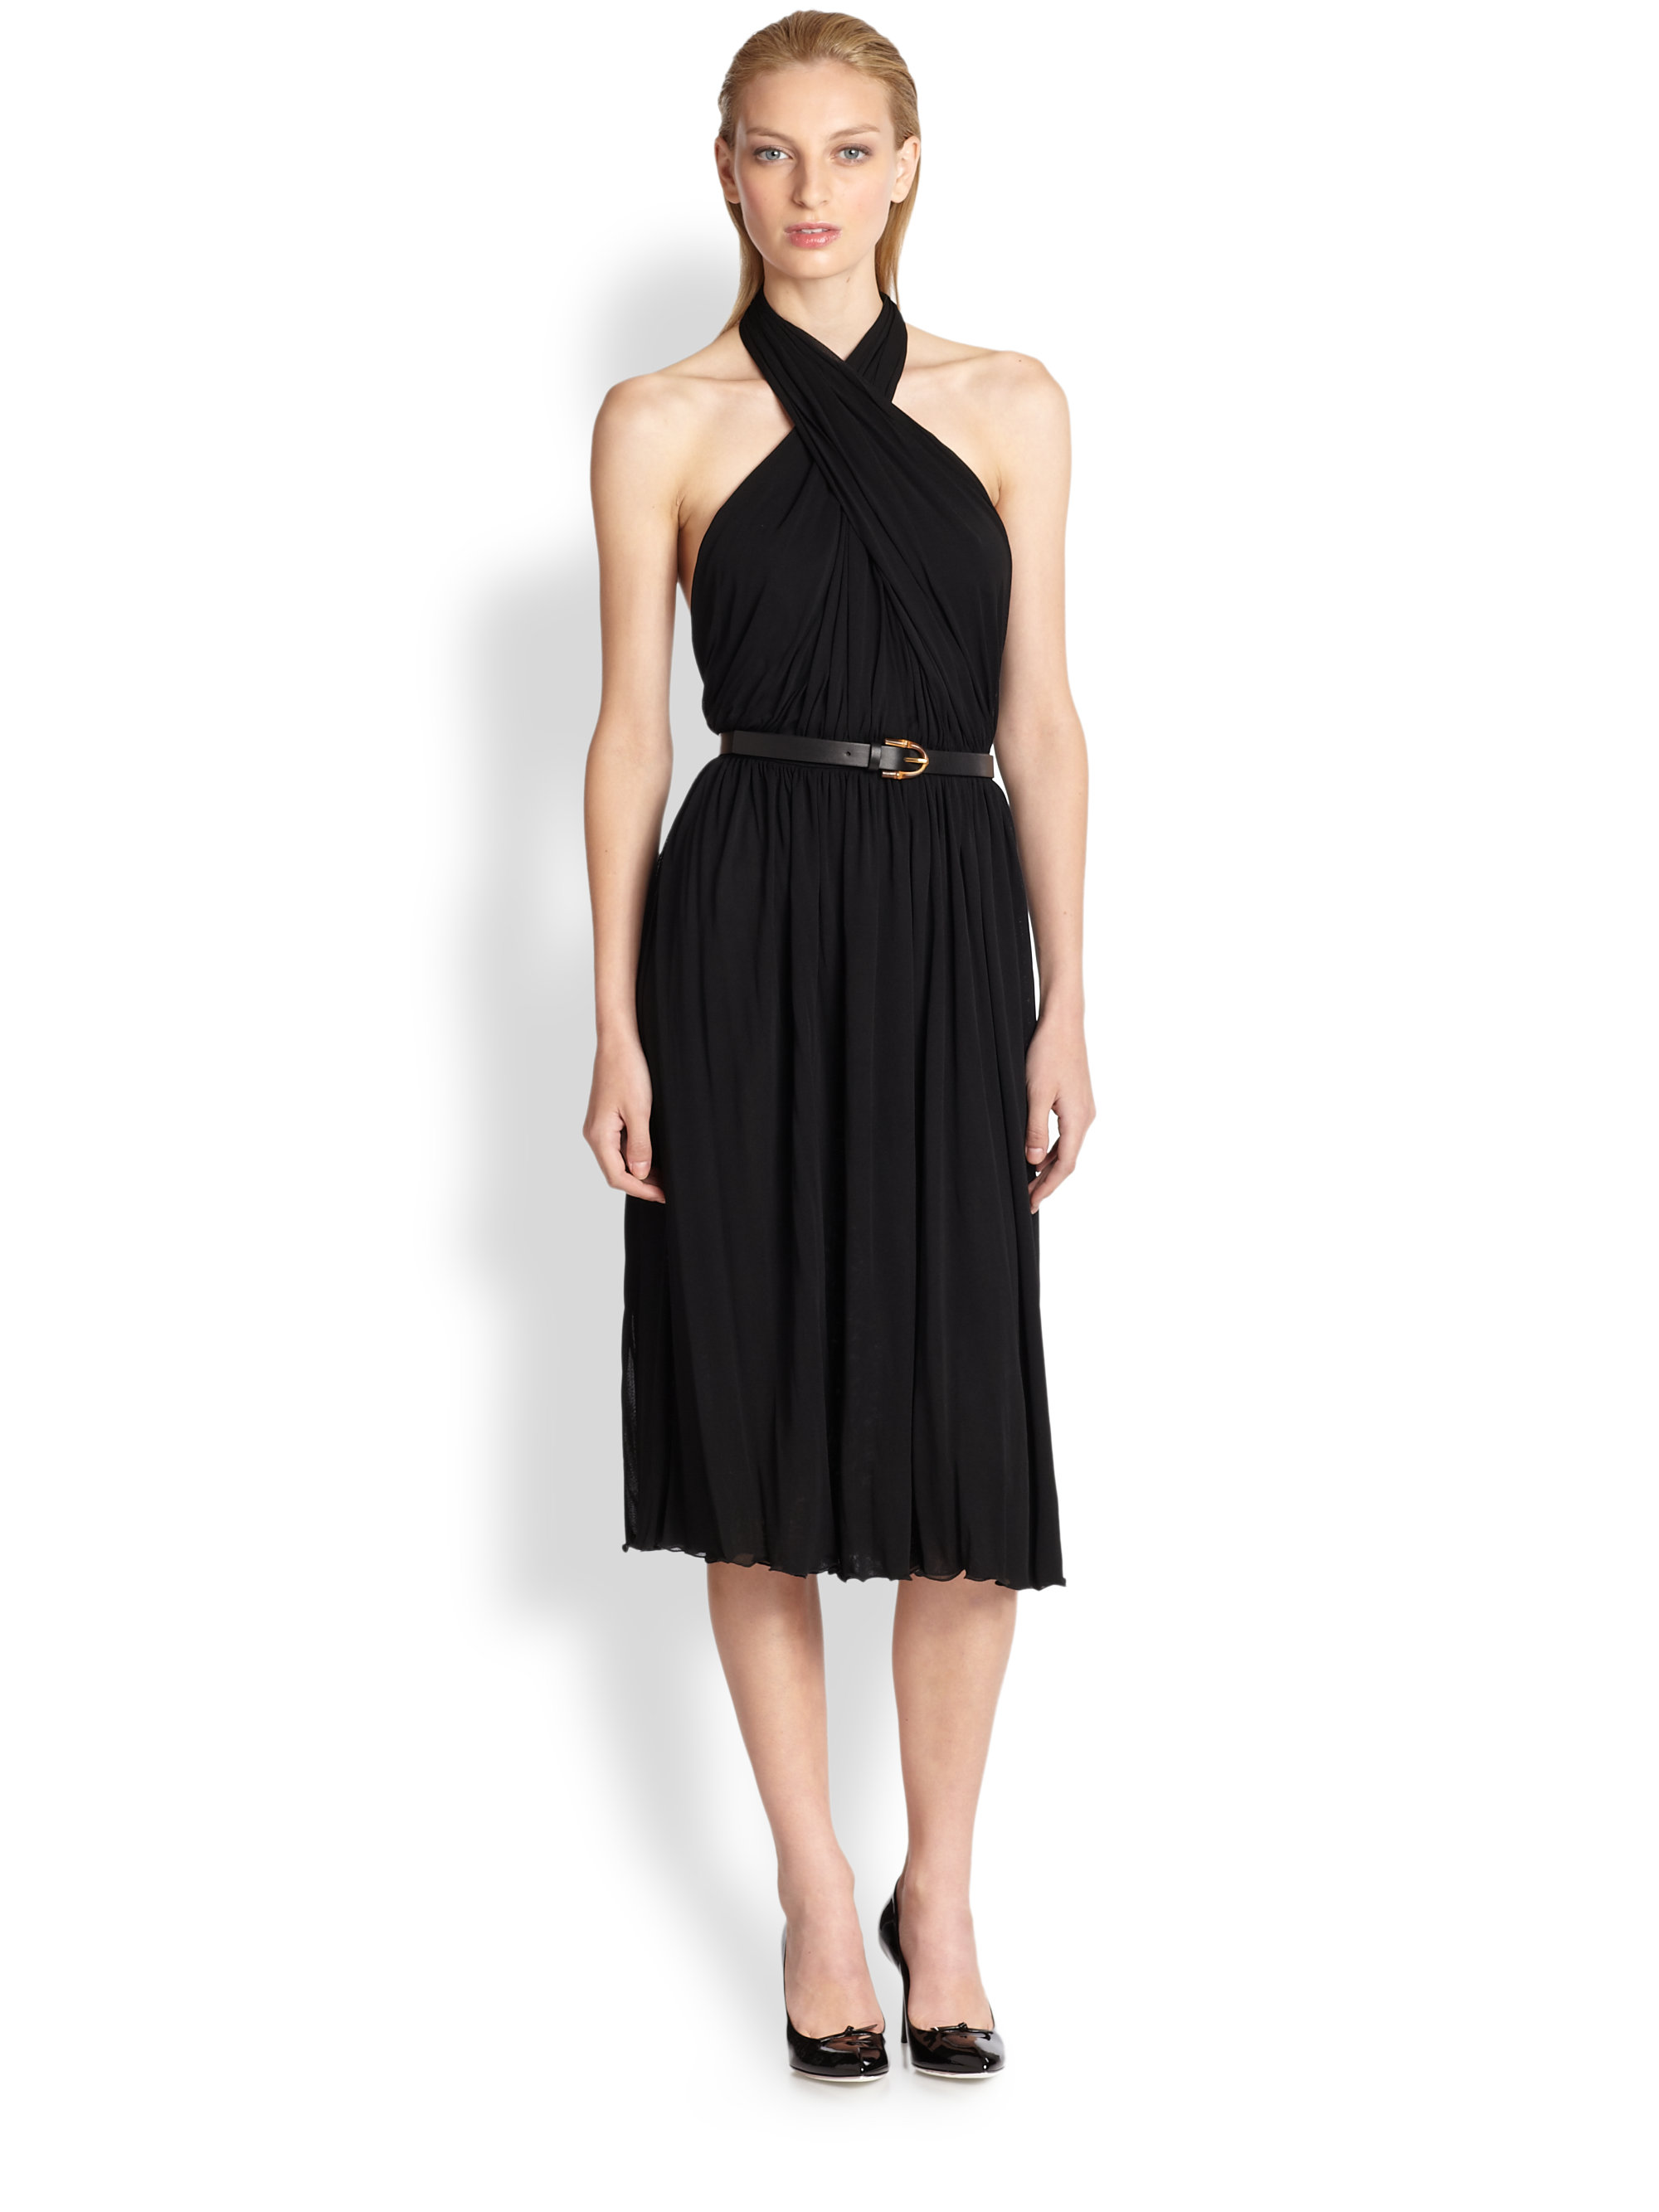 Lyst - Gucci Jersey Criss Cross Dress in Black